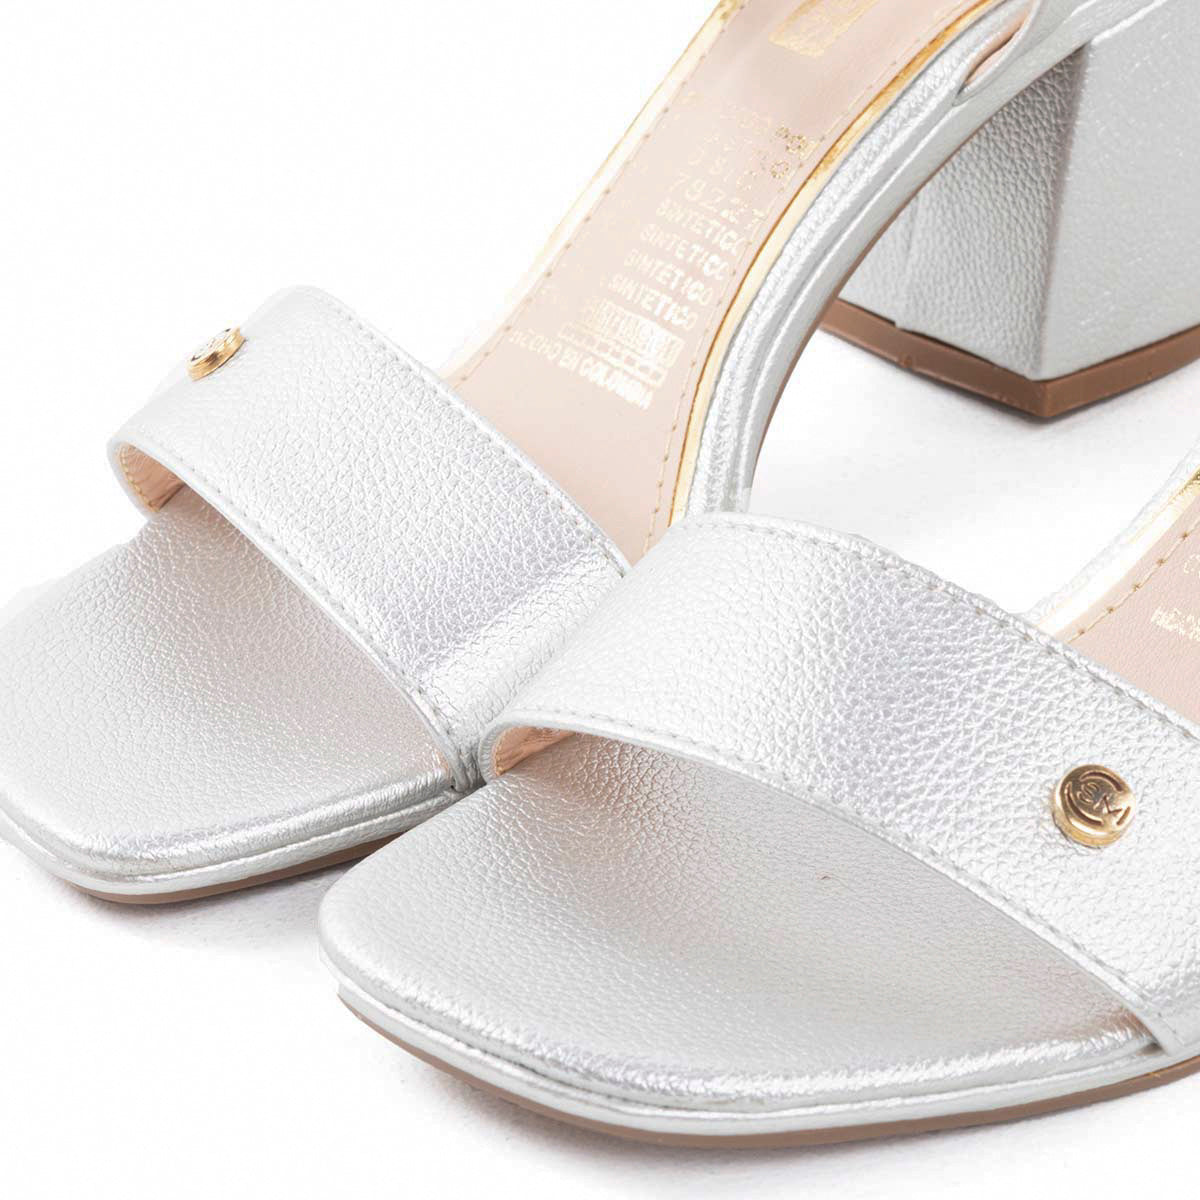 Sandalias elegantes color plata con correa